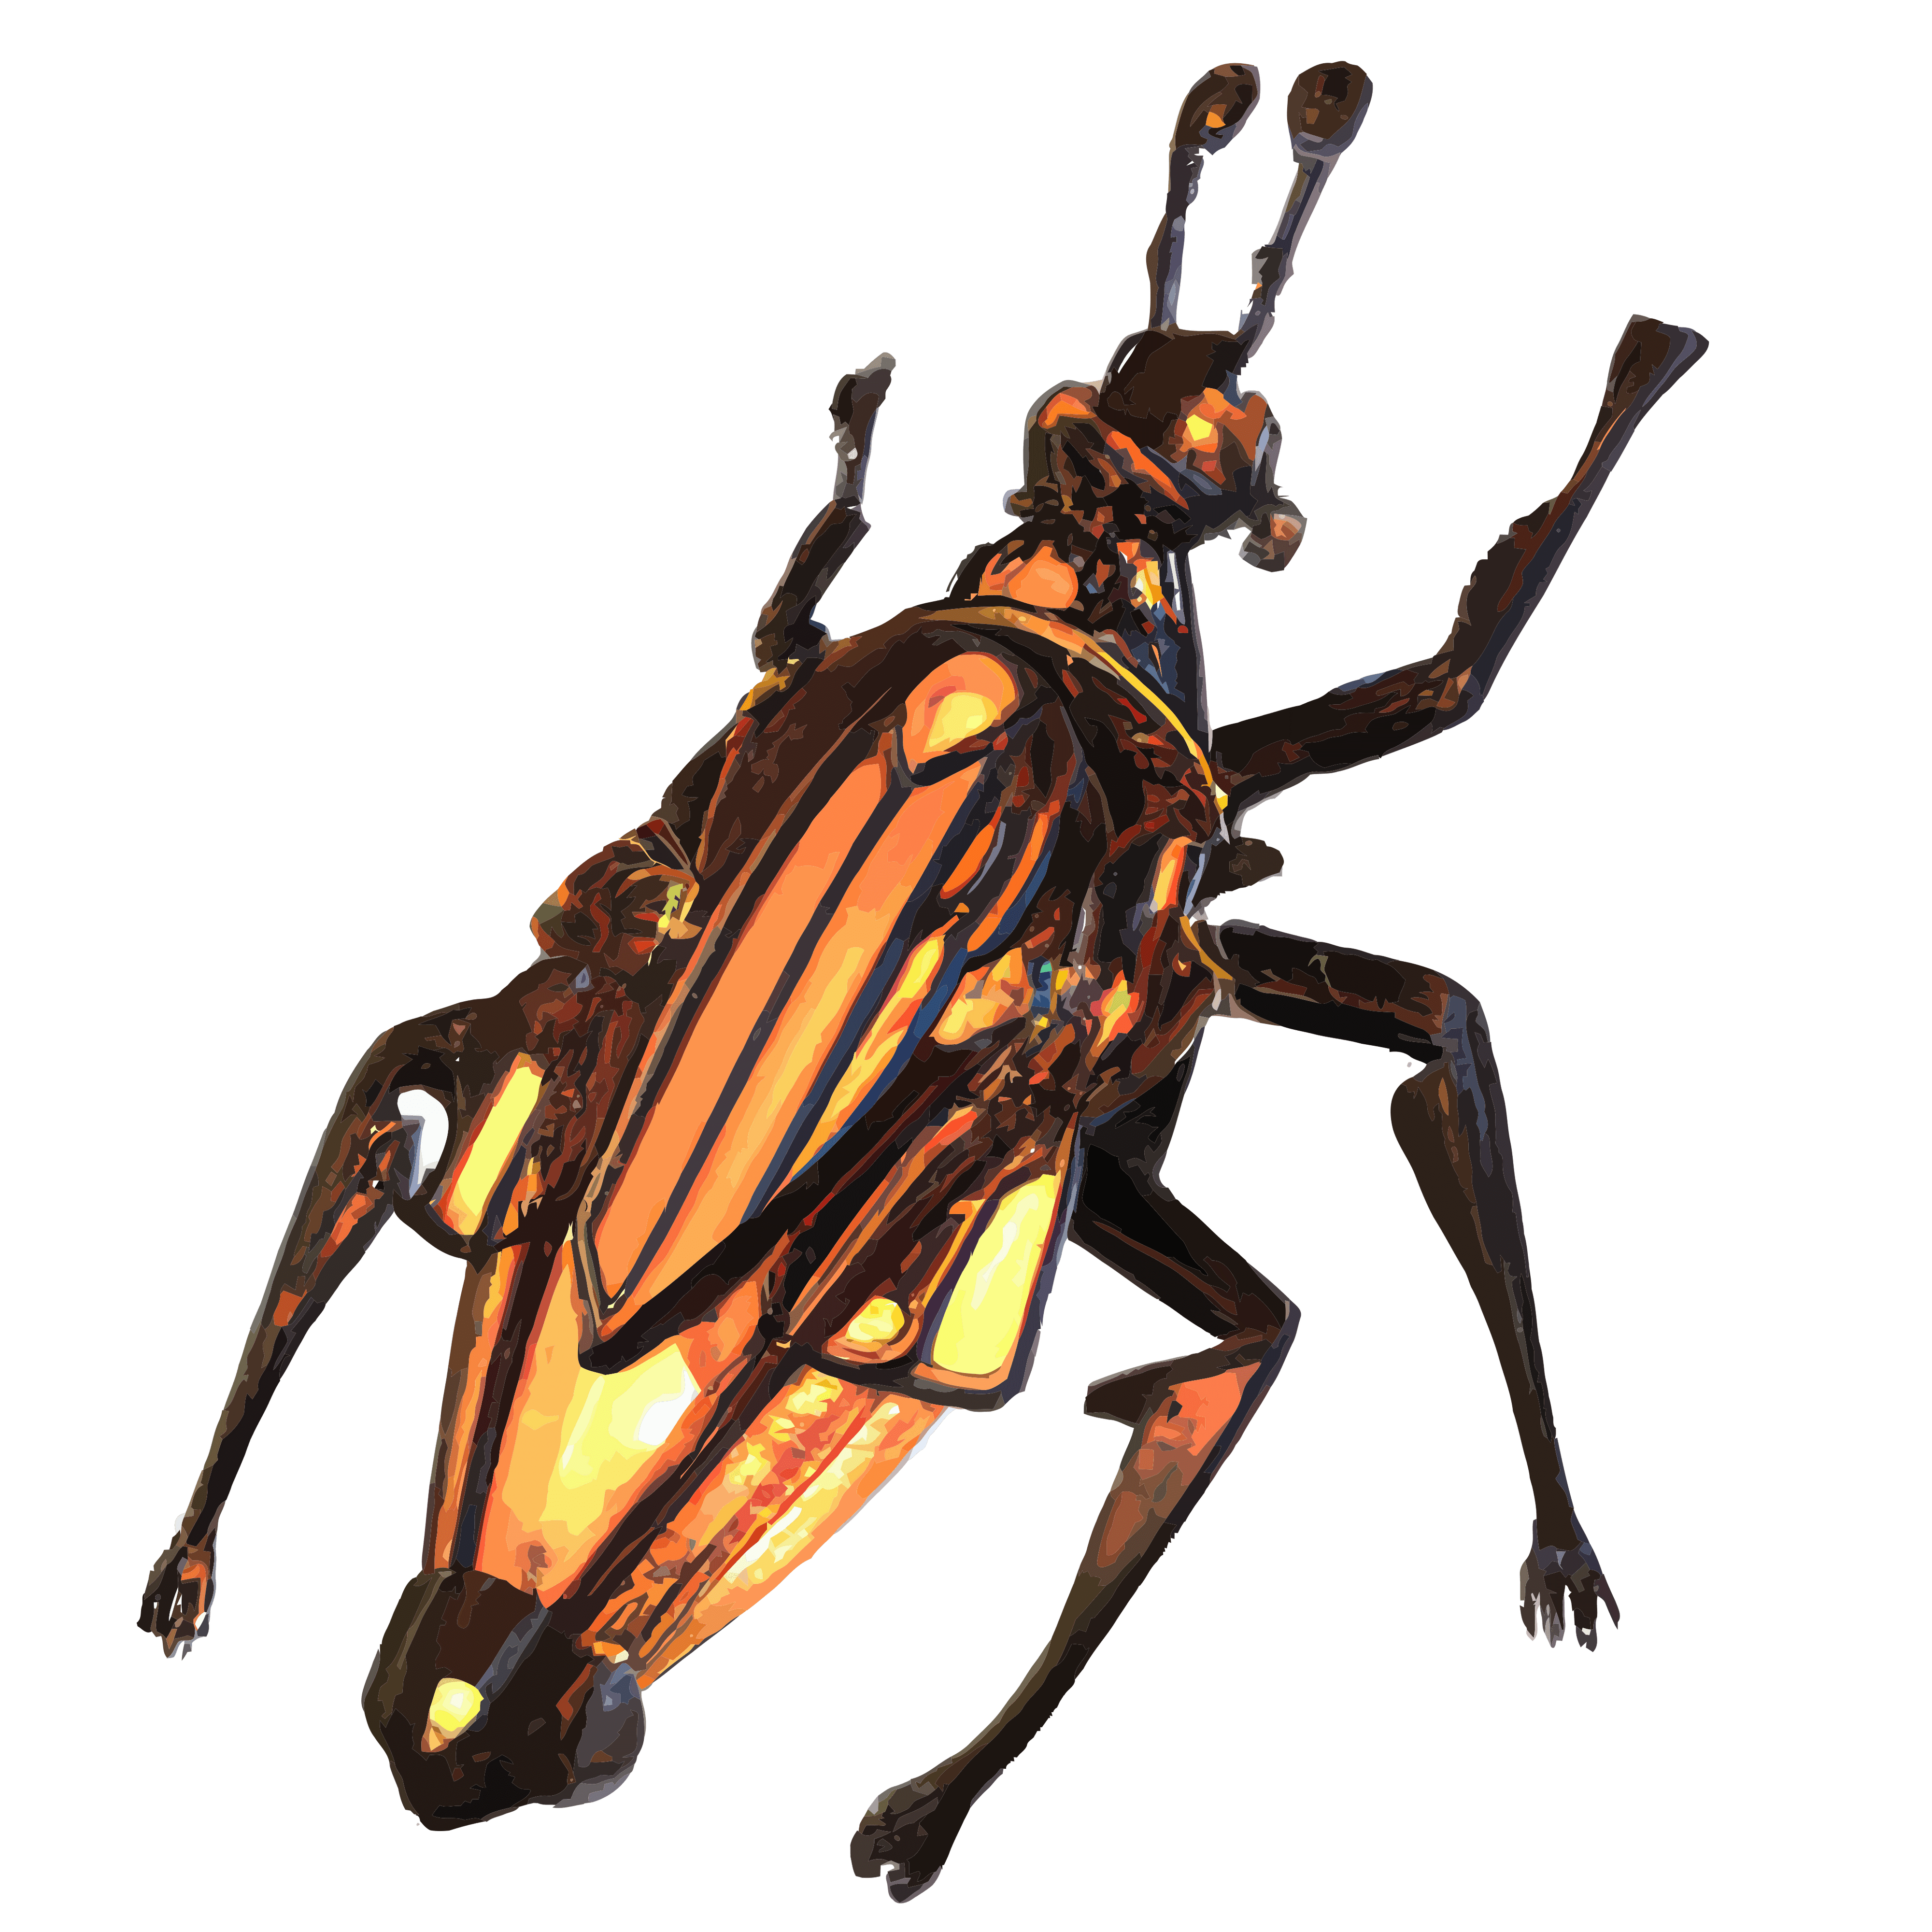 Firefly Lantern 12